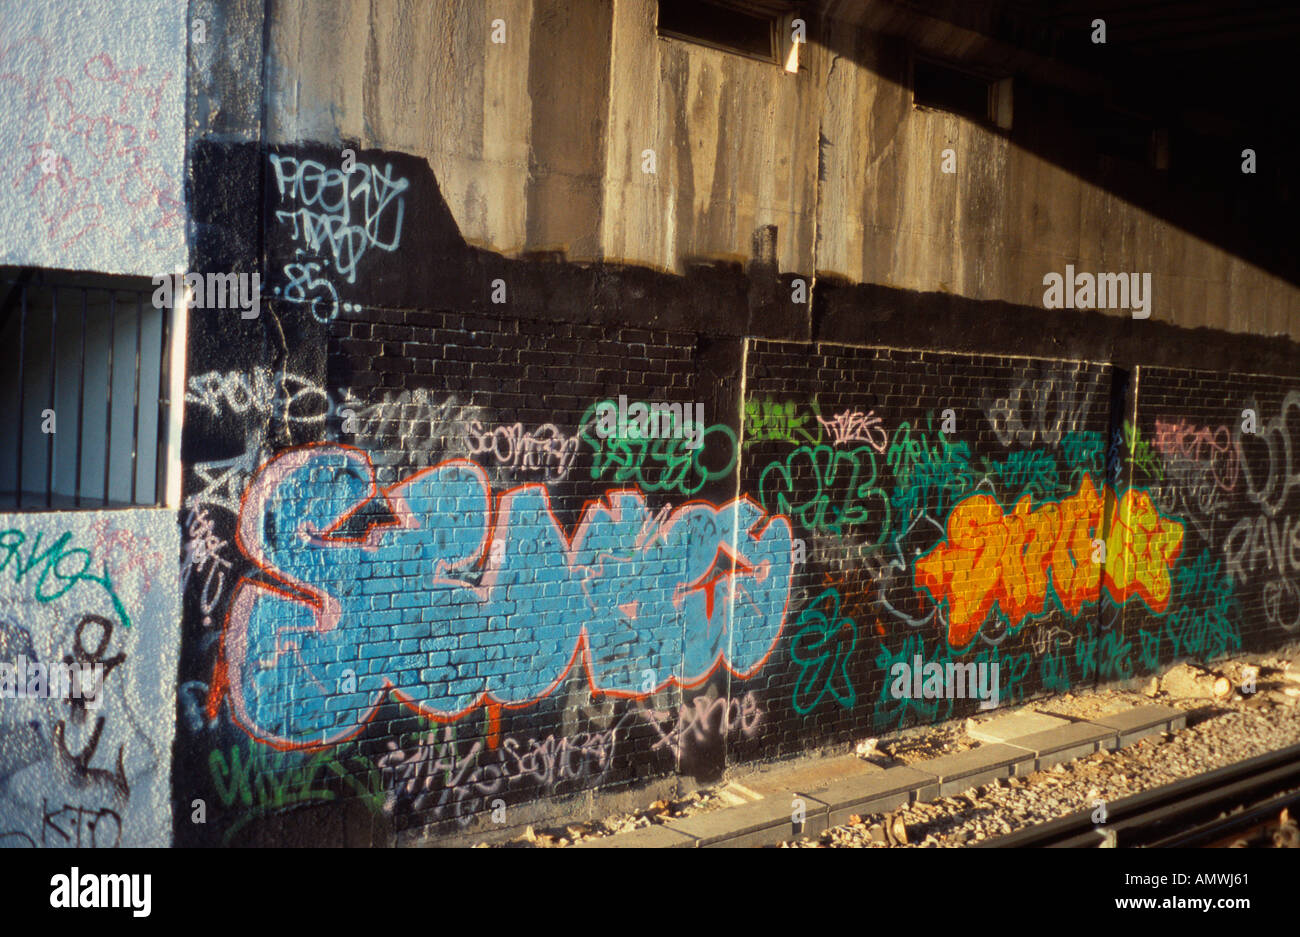 Graffiti alongside railway track Gunnersbury station, London, UK Stock Photo